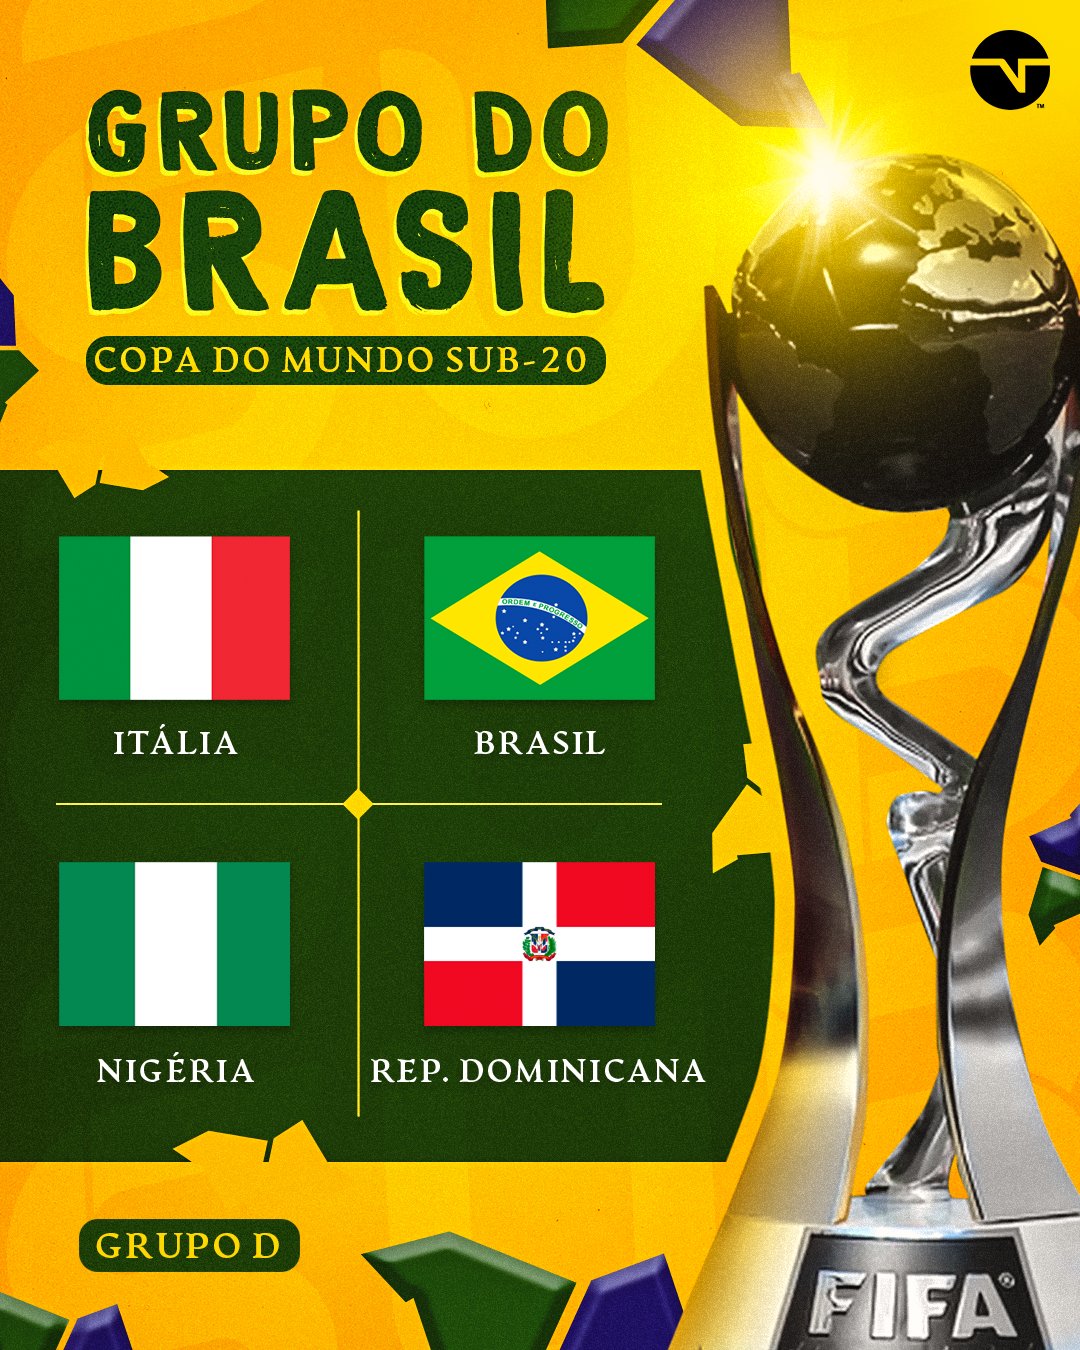 TNT Sports Brasil - DEU RUIM NA COPA DO MUNDO SUB-17 🥲🇧🇷 Os